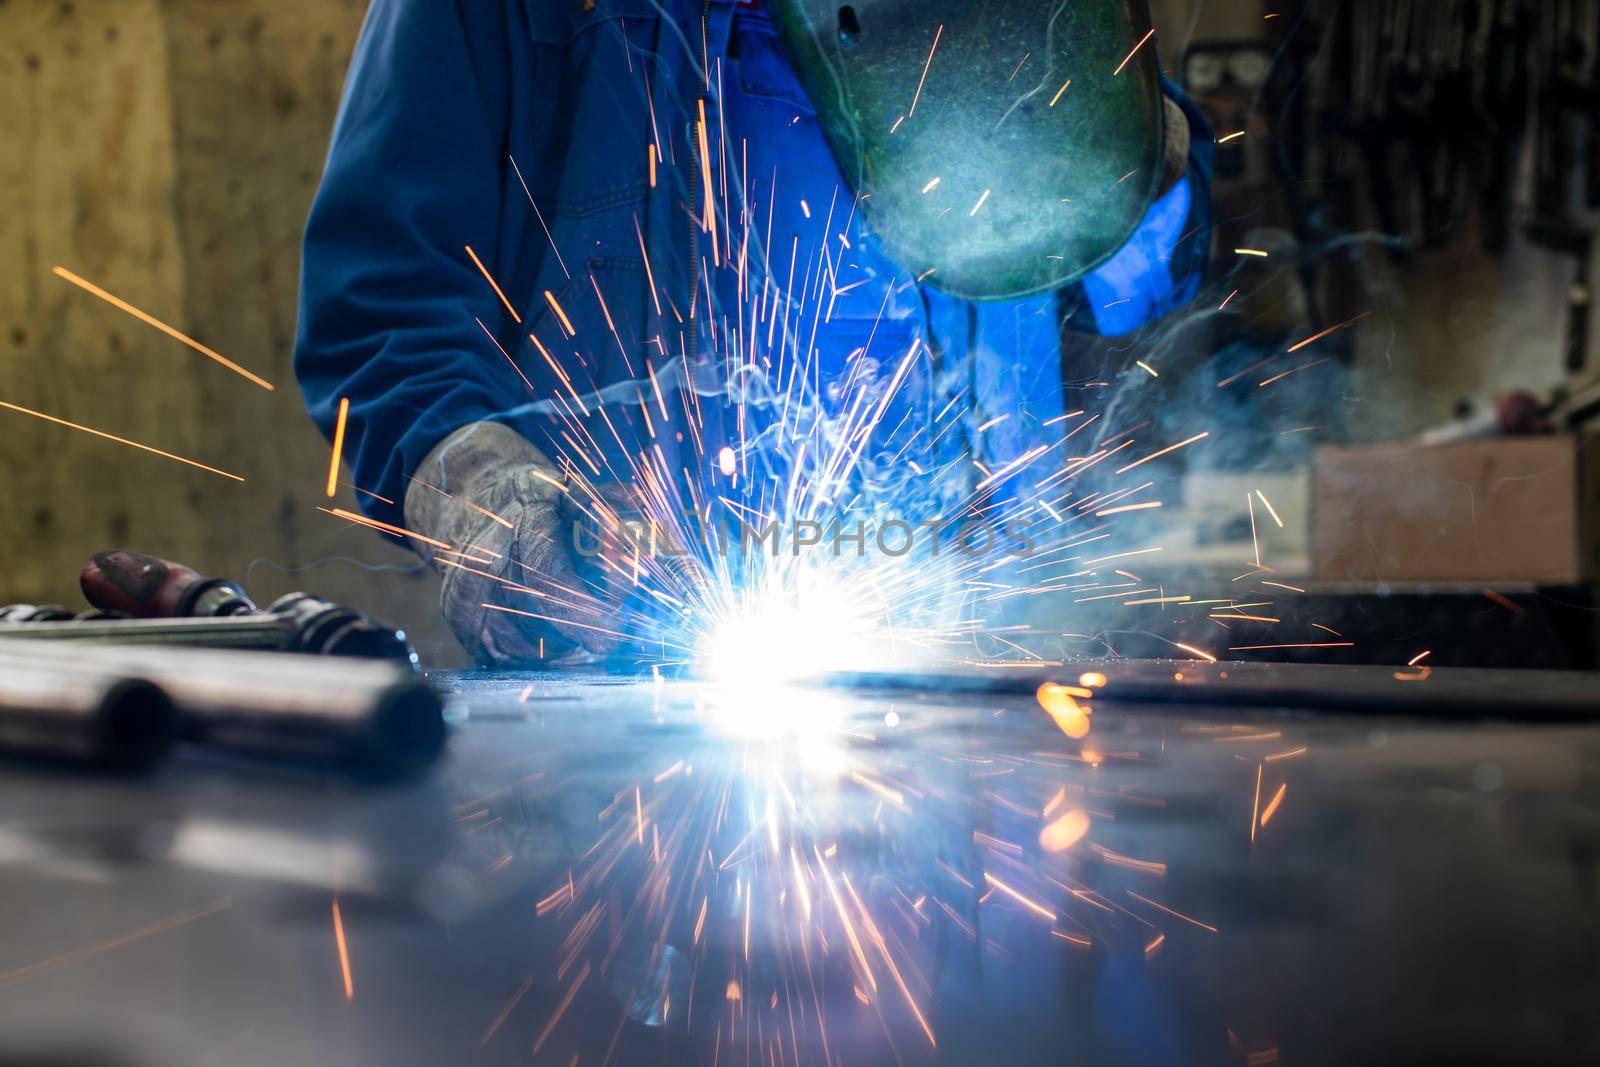 Welder in his workshop welding metal, lots of sparks flying around